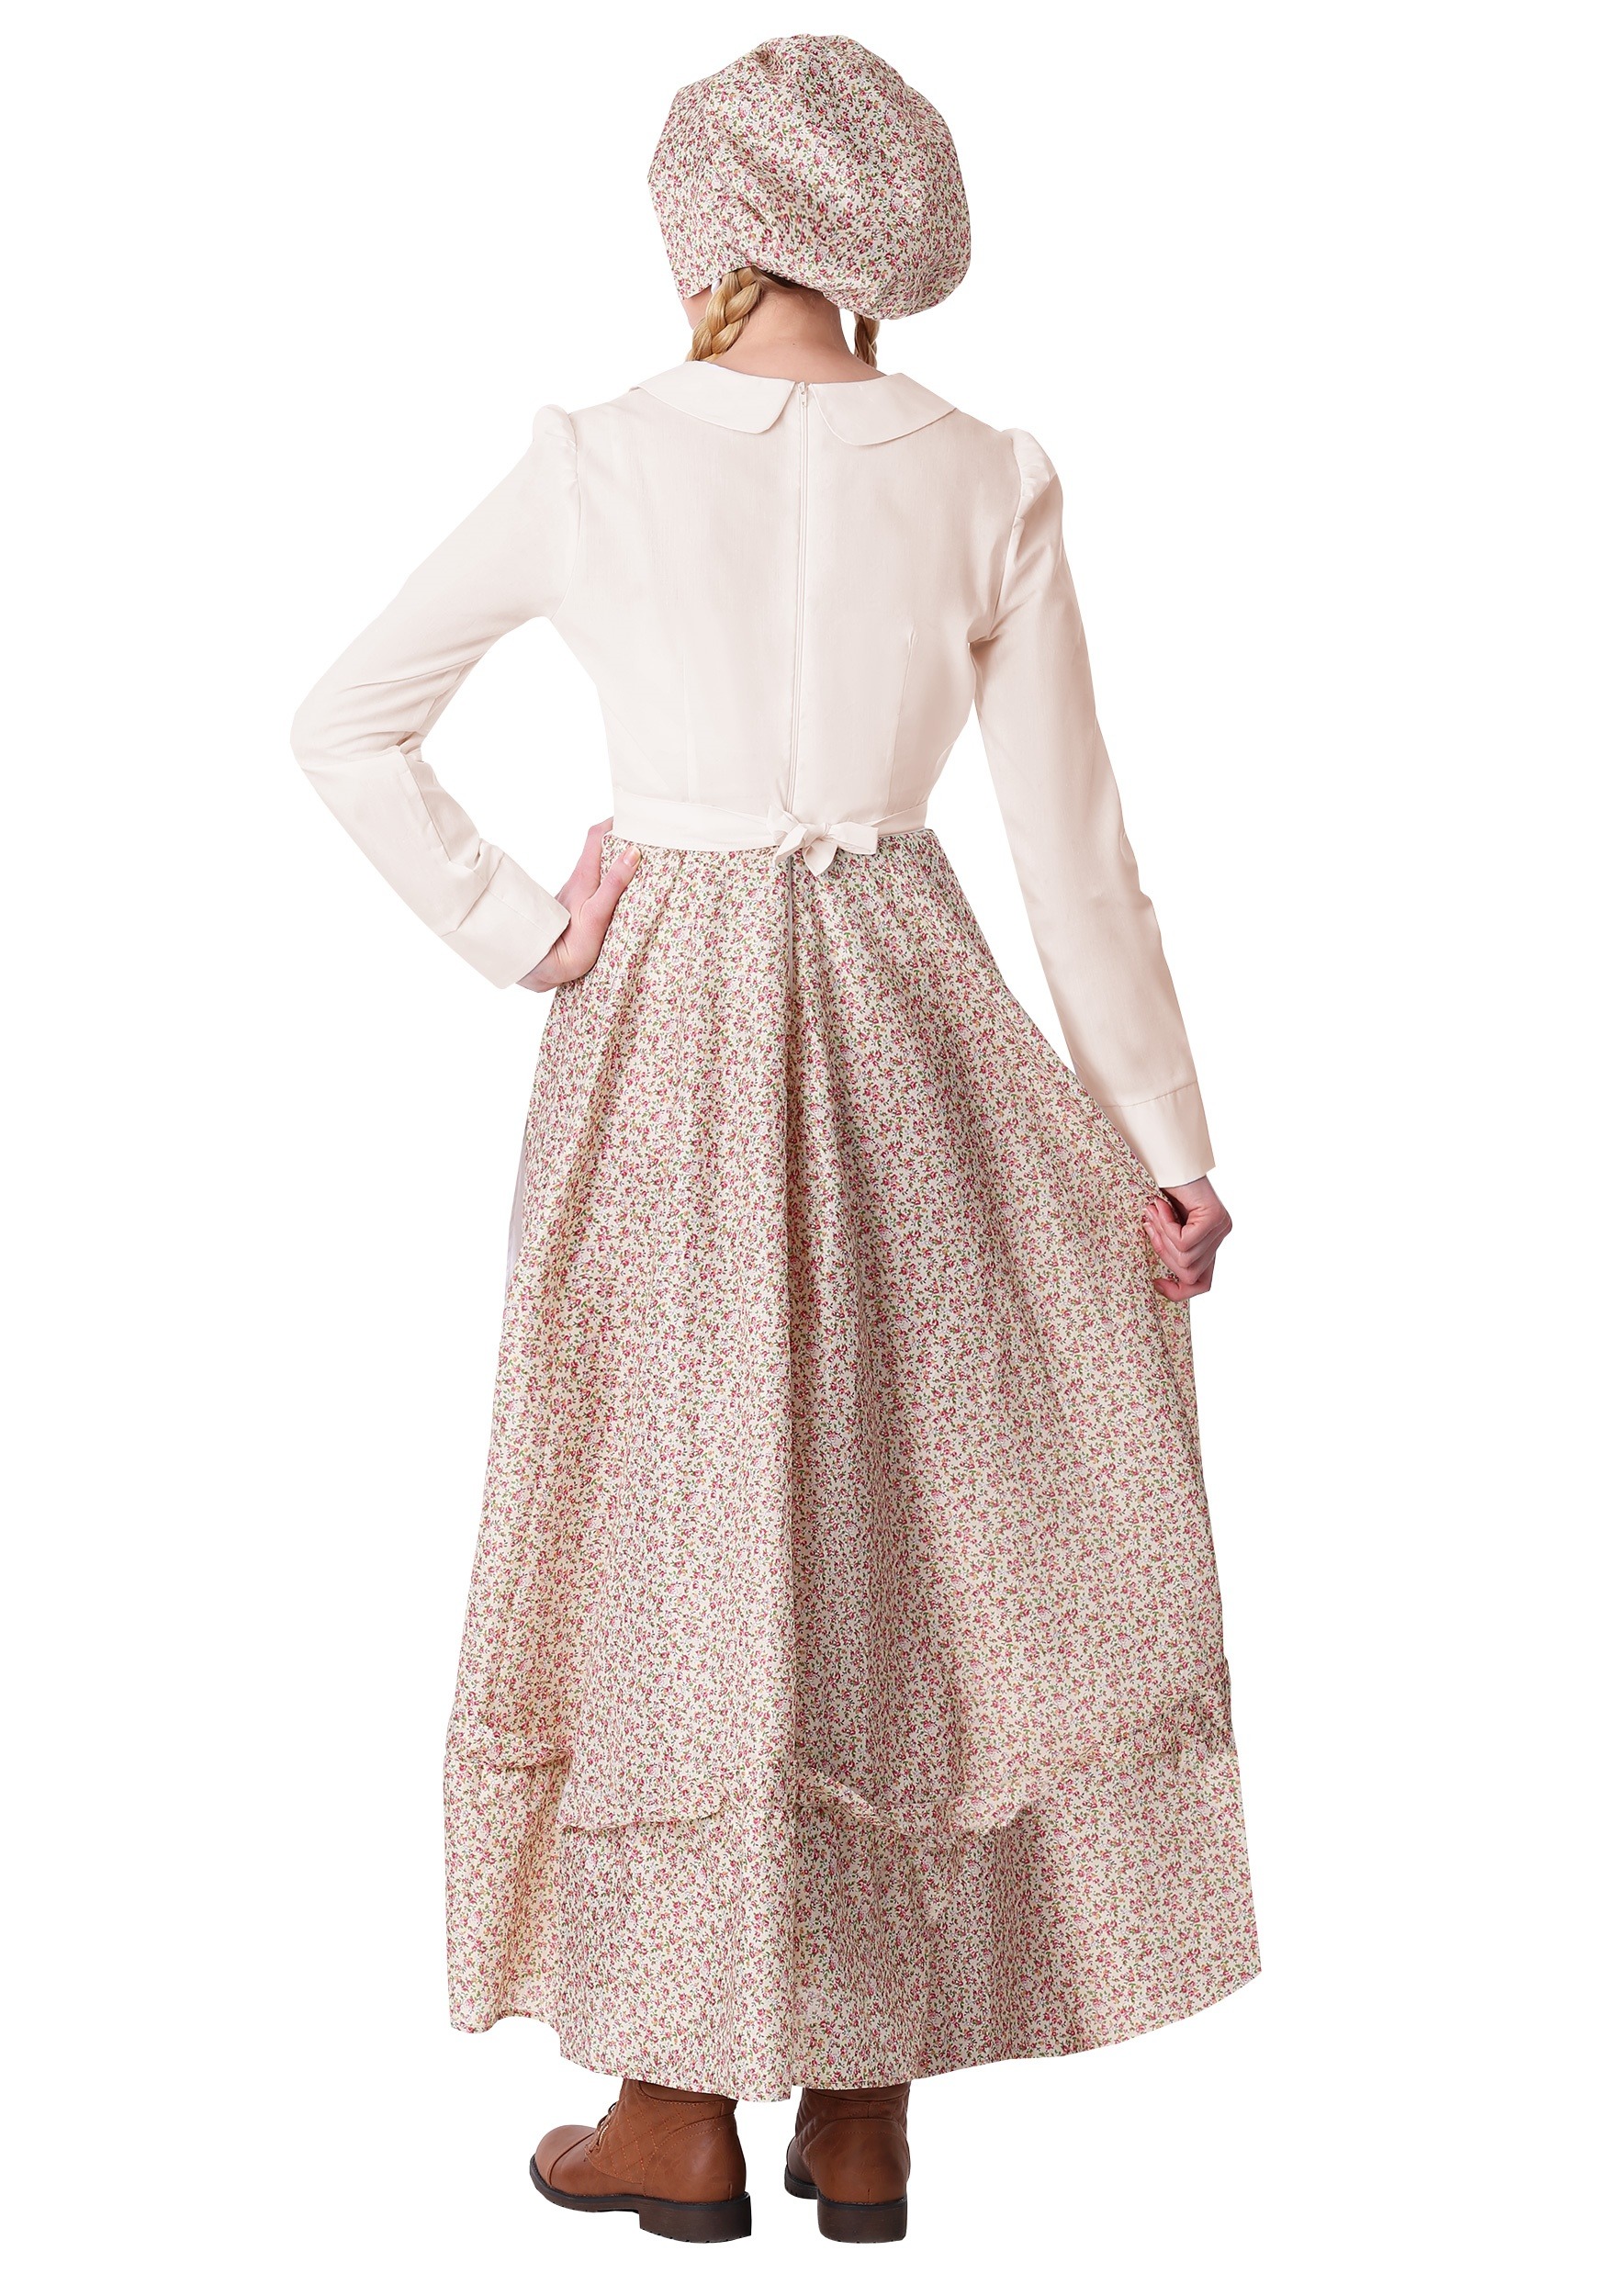 Prairie Pioneer Women's Fancy Dress Costume